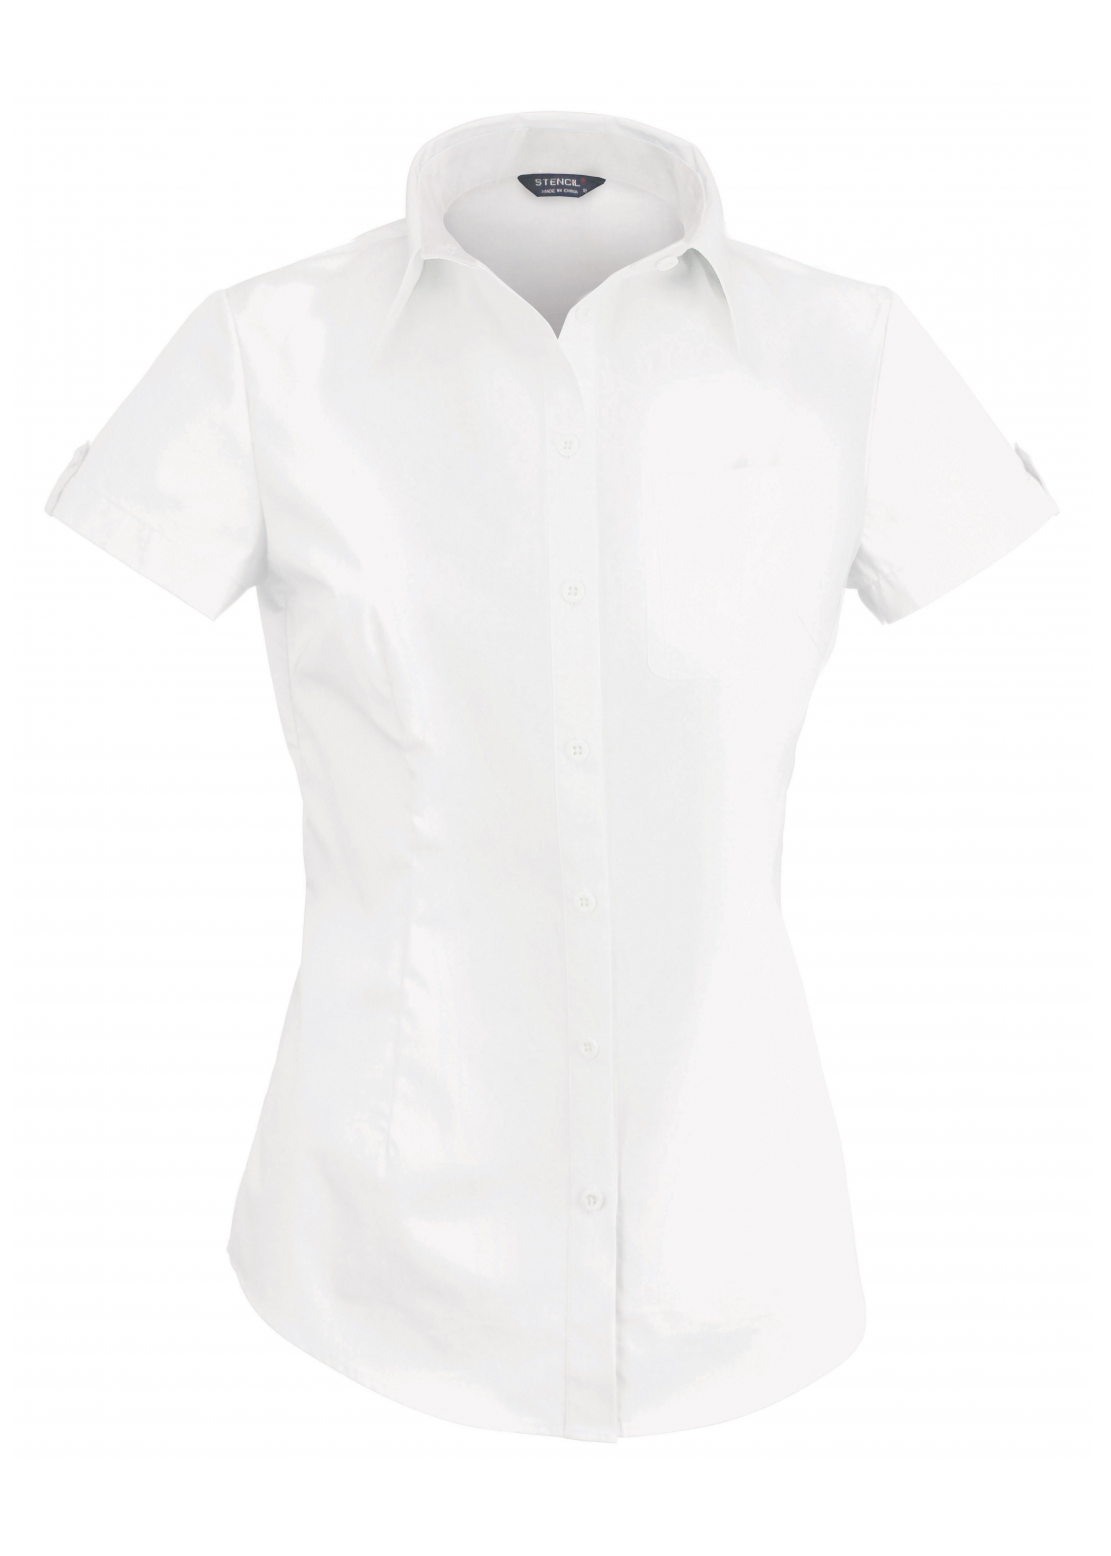 Stencil Ladies Short Sleeve Hospitality Nano Shirt